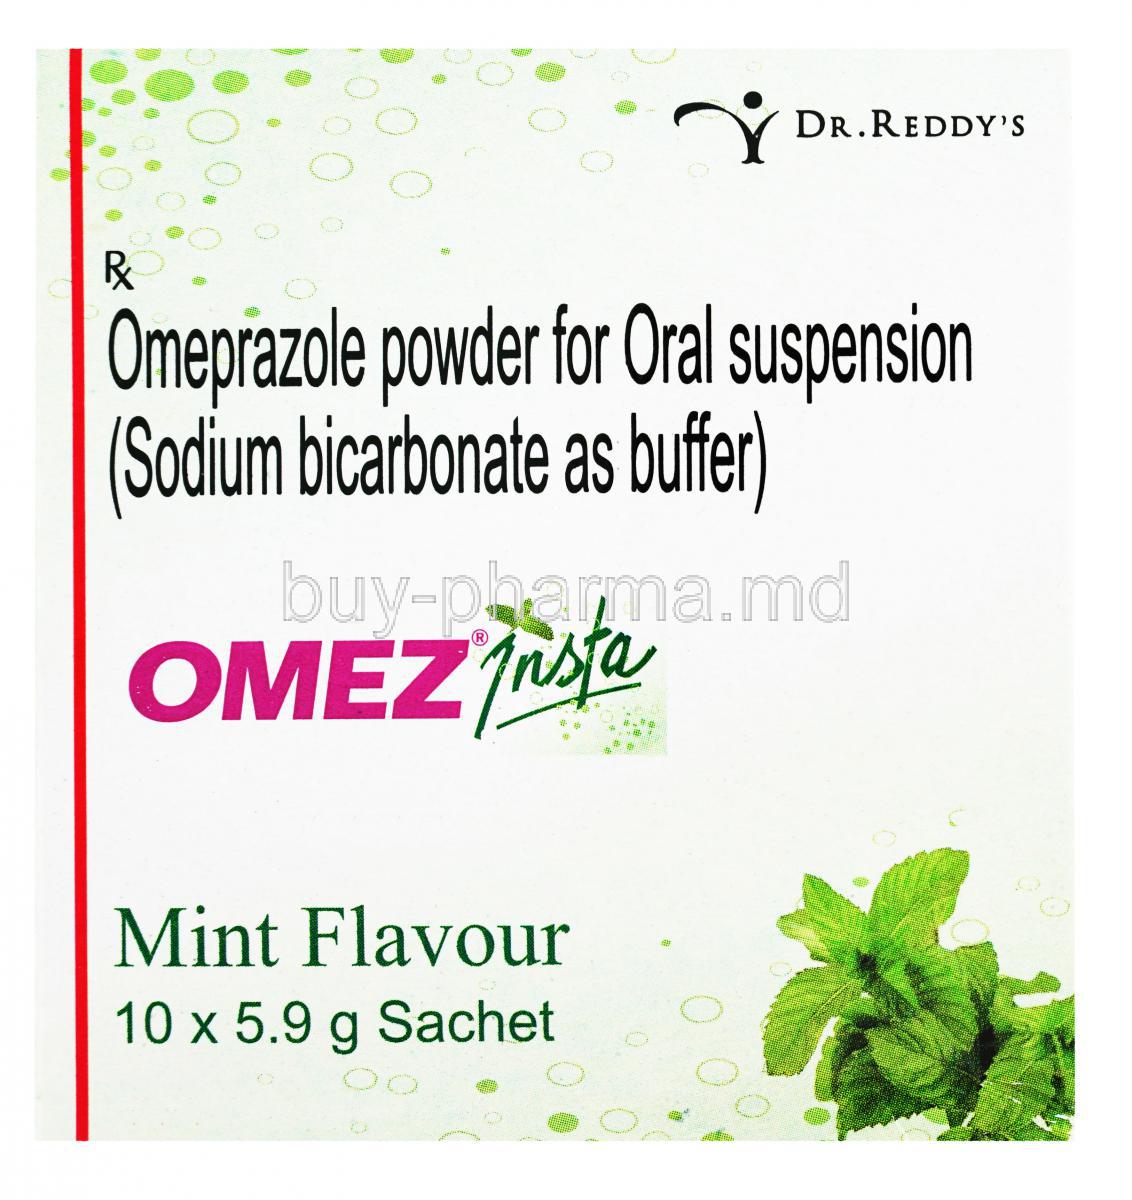 Omez Insta Mint Flavour Sachet,Omeprazole Powder for oral suspension,  Sodium Bicarbonate as buffer, Dr.Reddy's, box front presentation